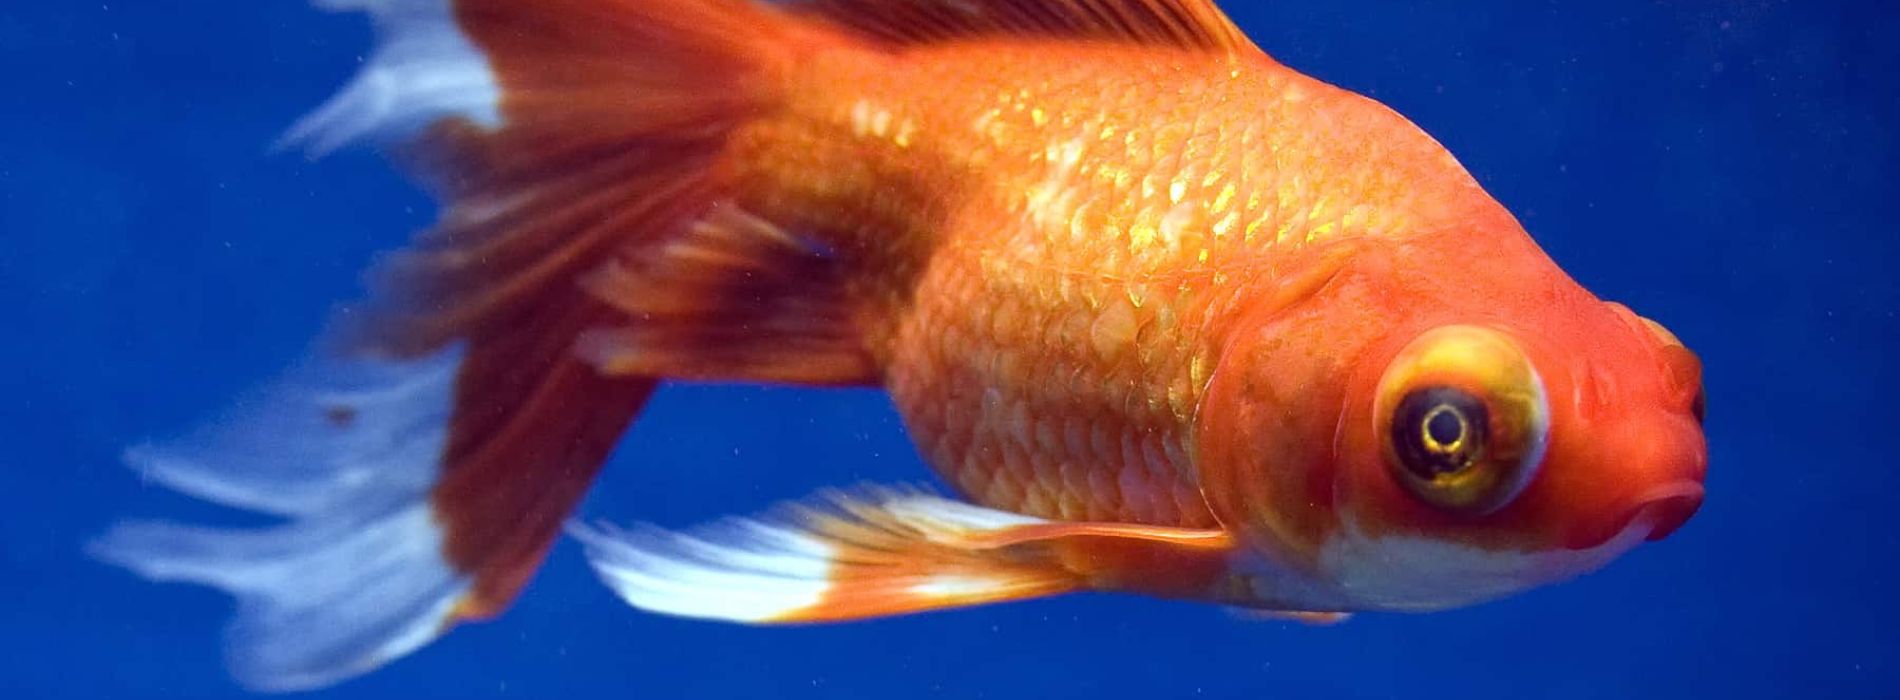 telescope-goldfish-swimming-in-an-aquarium-with-friends